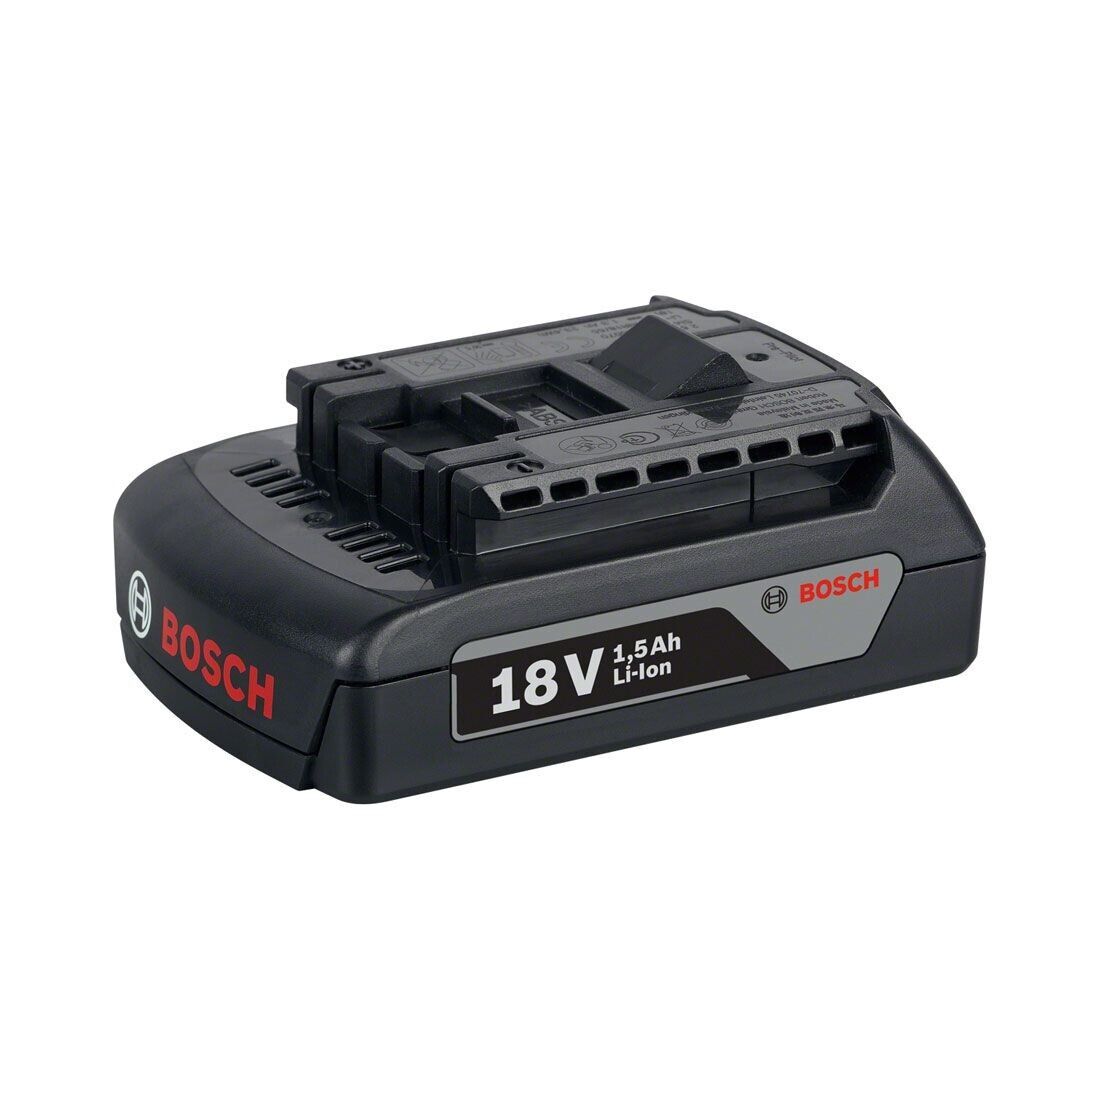 BOSCH 18V LI-ION BATTERY 1.5AH 2607336803 (using AL 1830 CV charger) UK POST (Used)